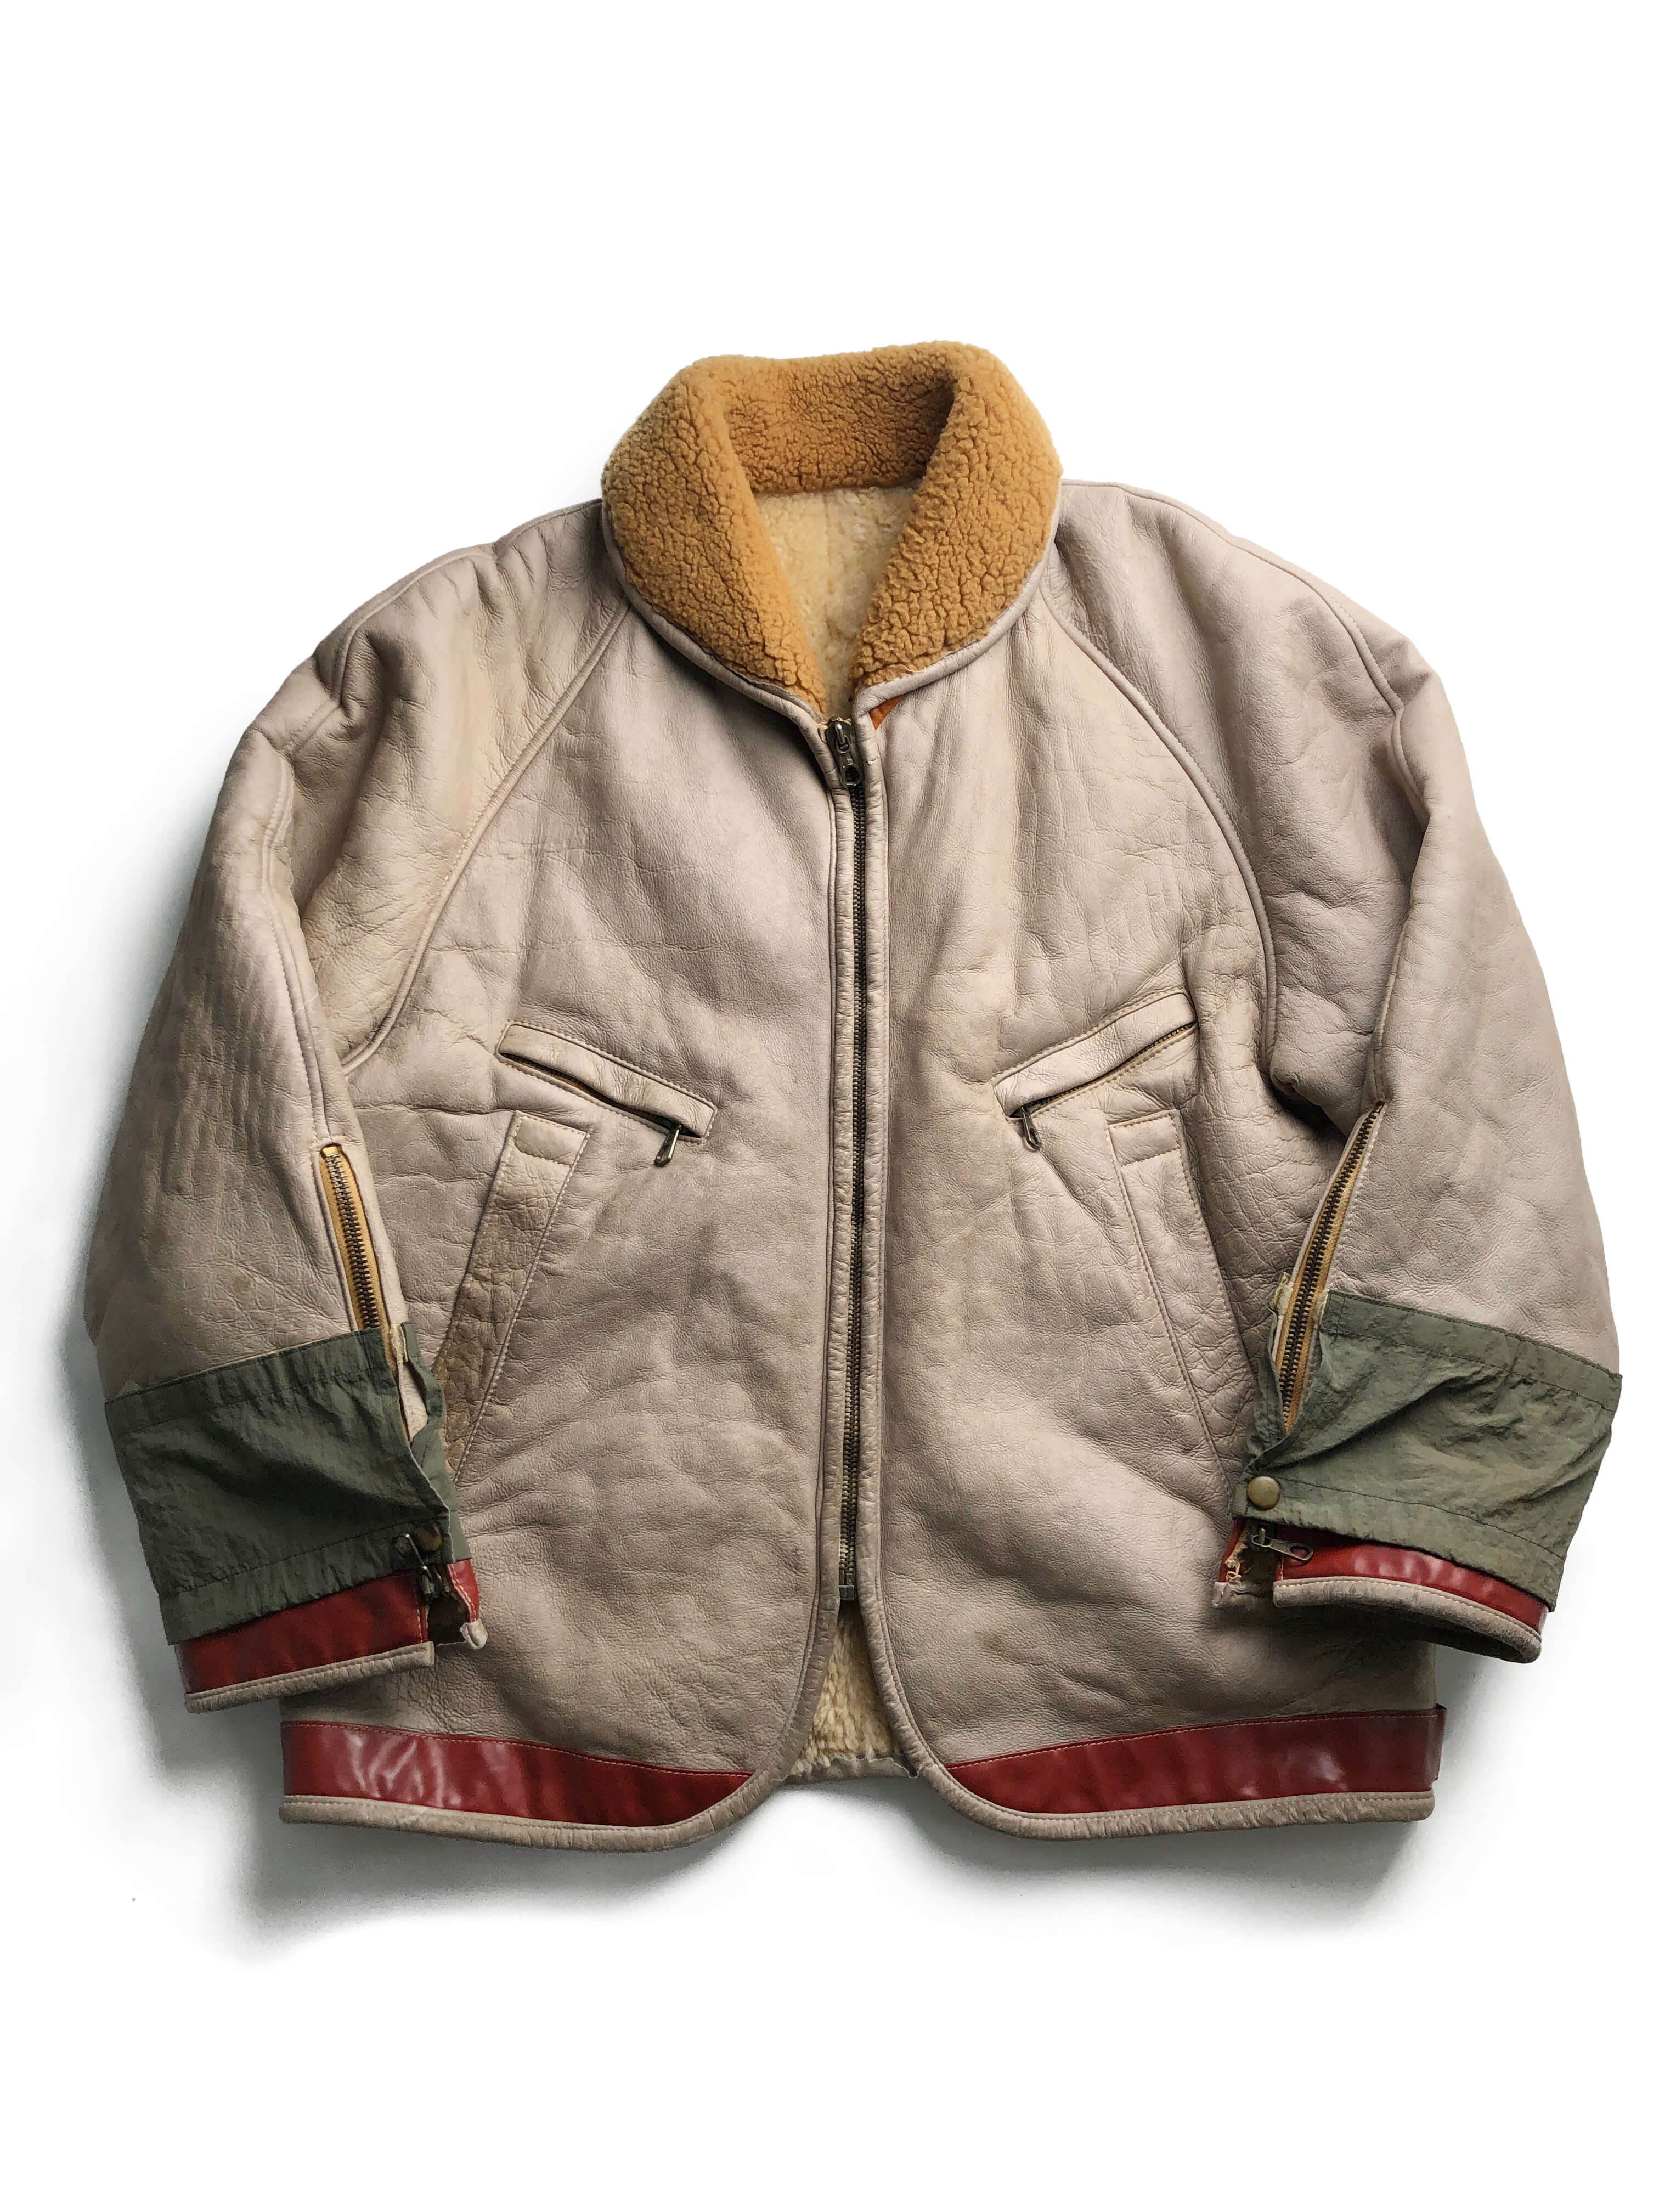 C.P. COMPANY 1983 sheepskin jacket